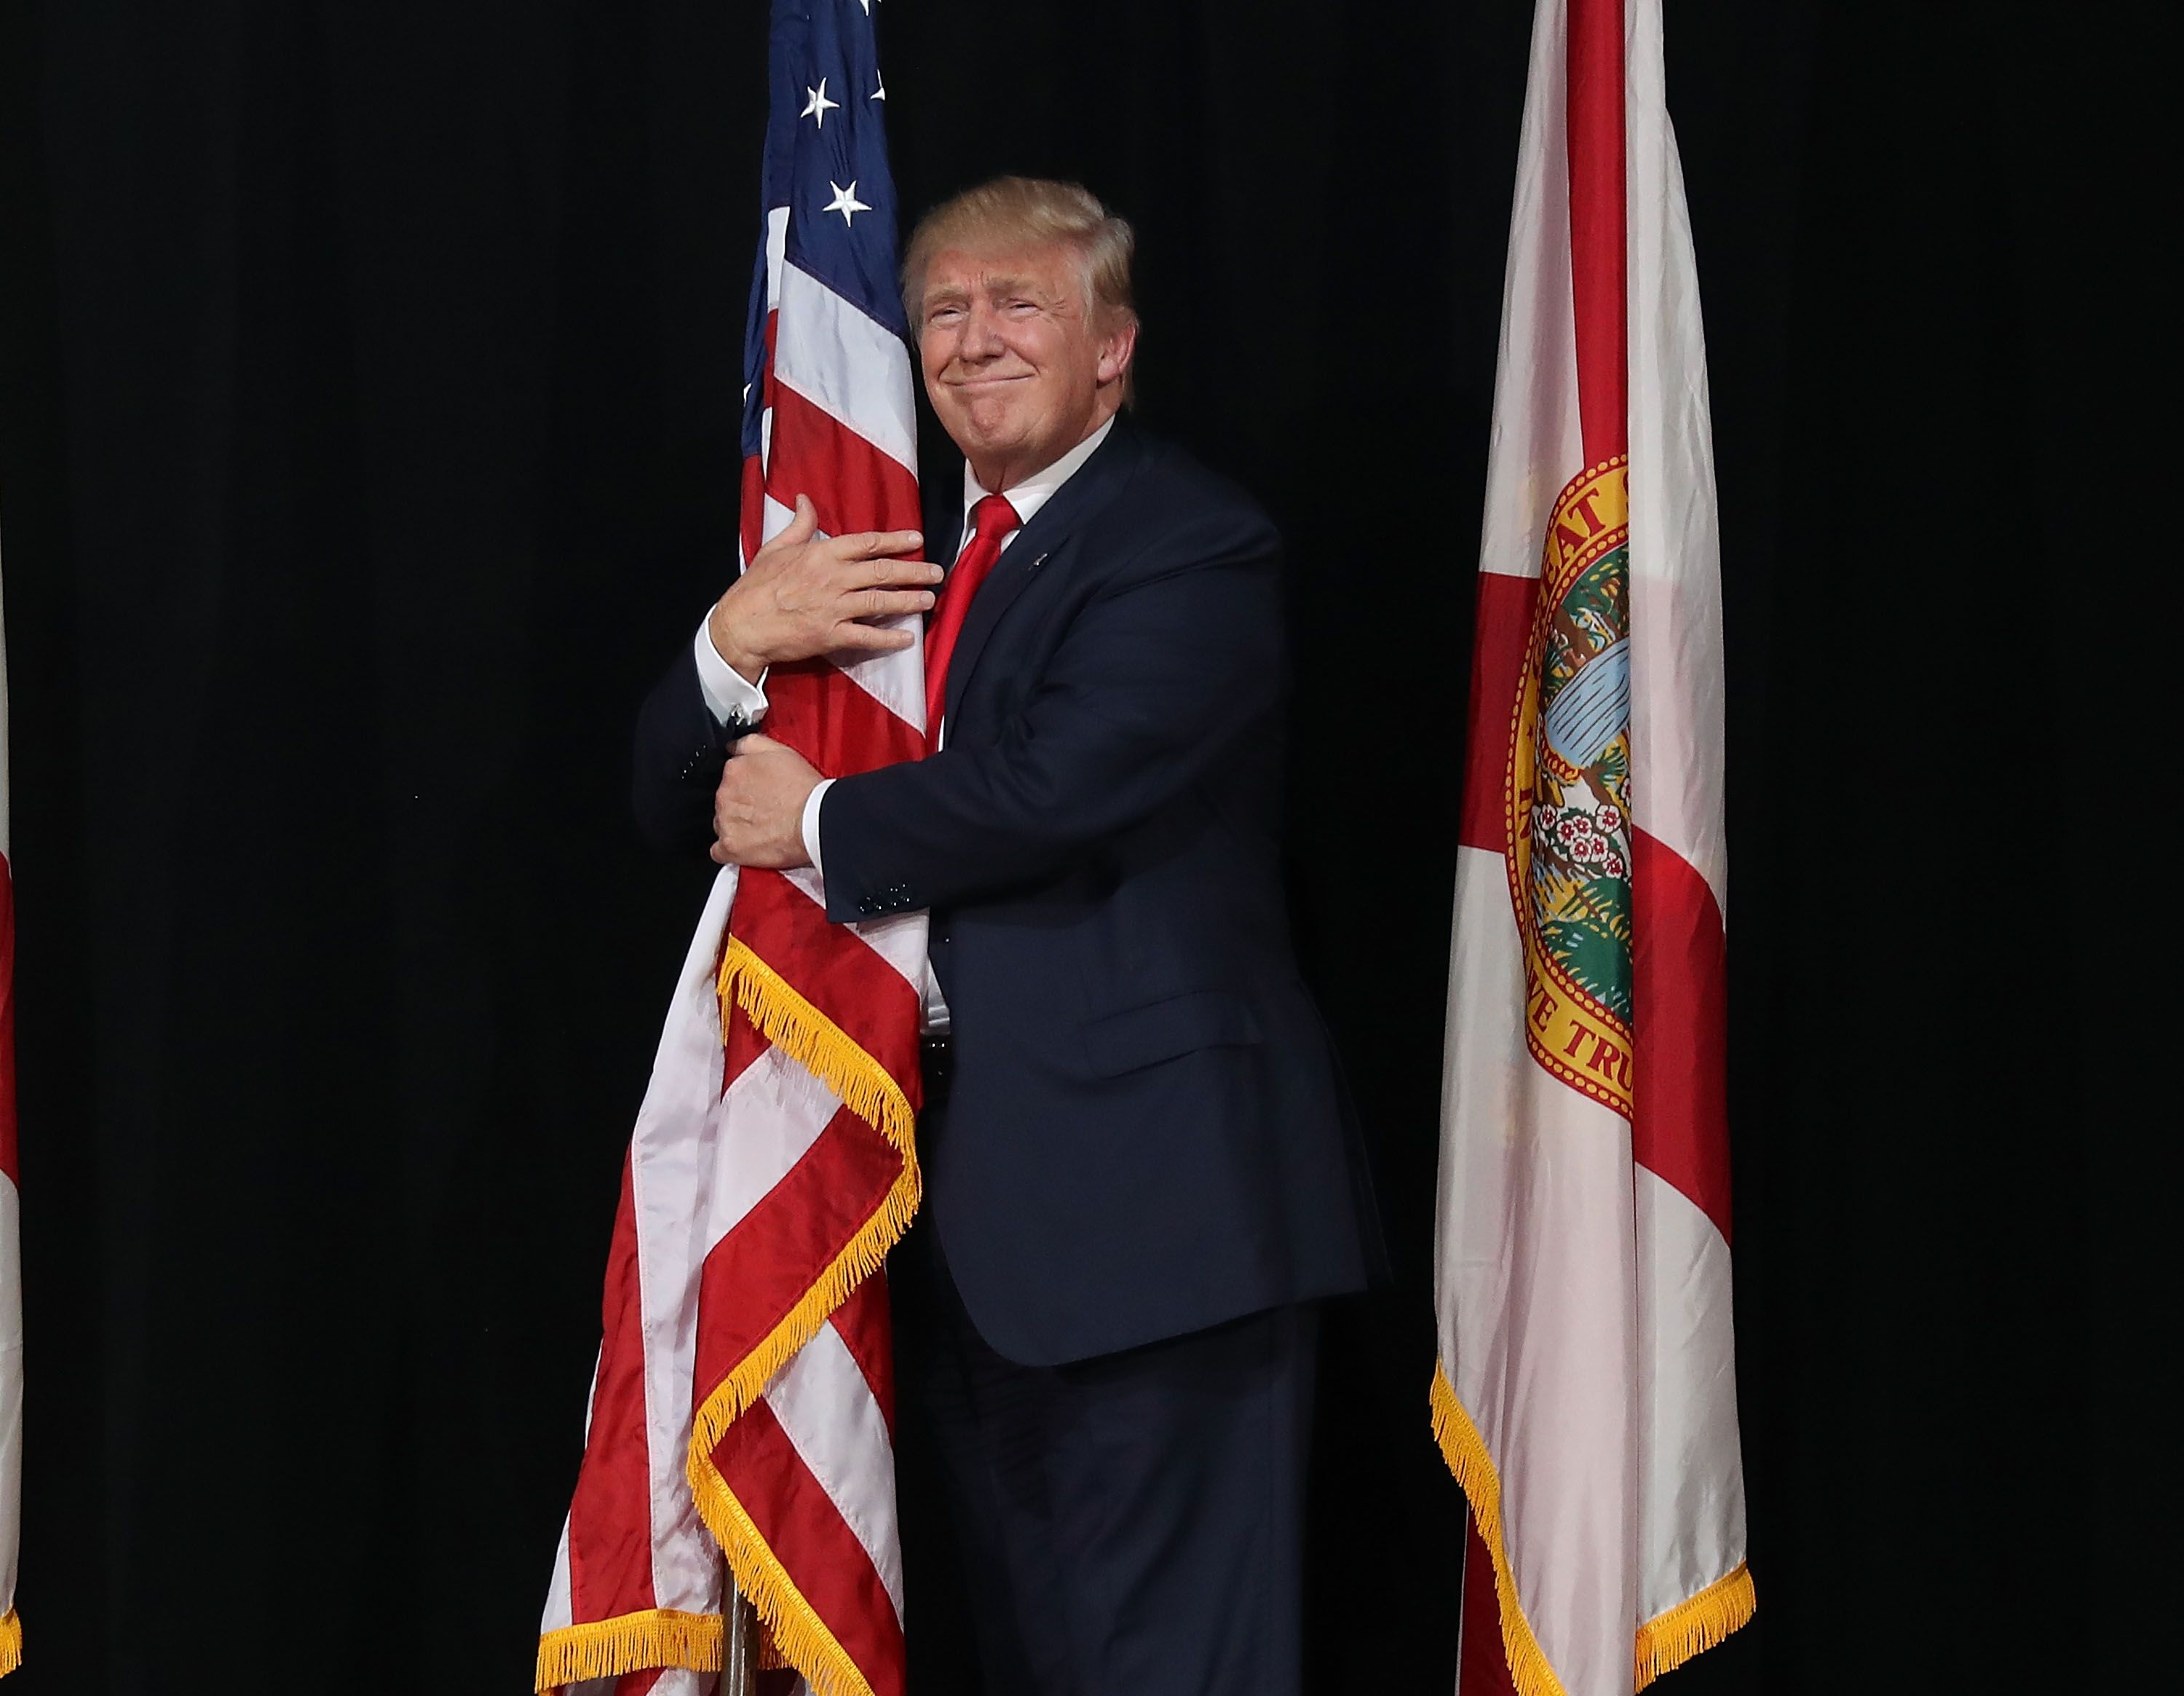 republican-presidential-candidate-donald-trump-hugs-the-news-photo-617806568-1560614003.jpg